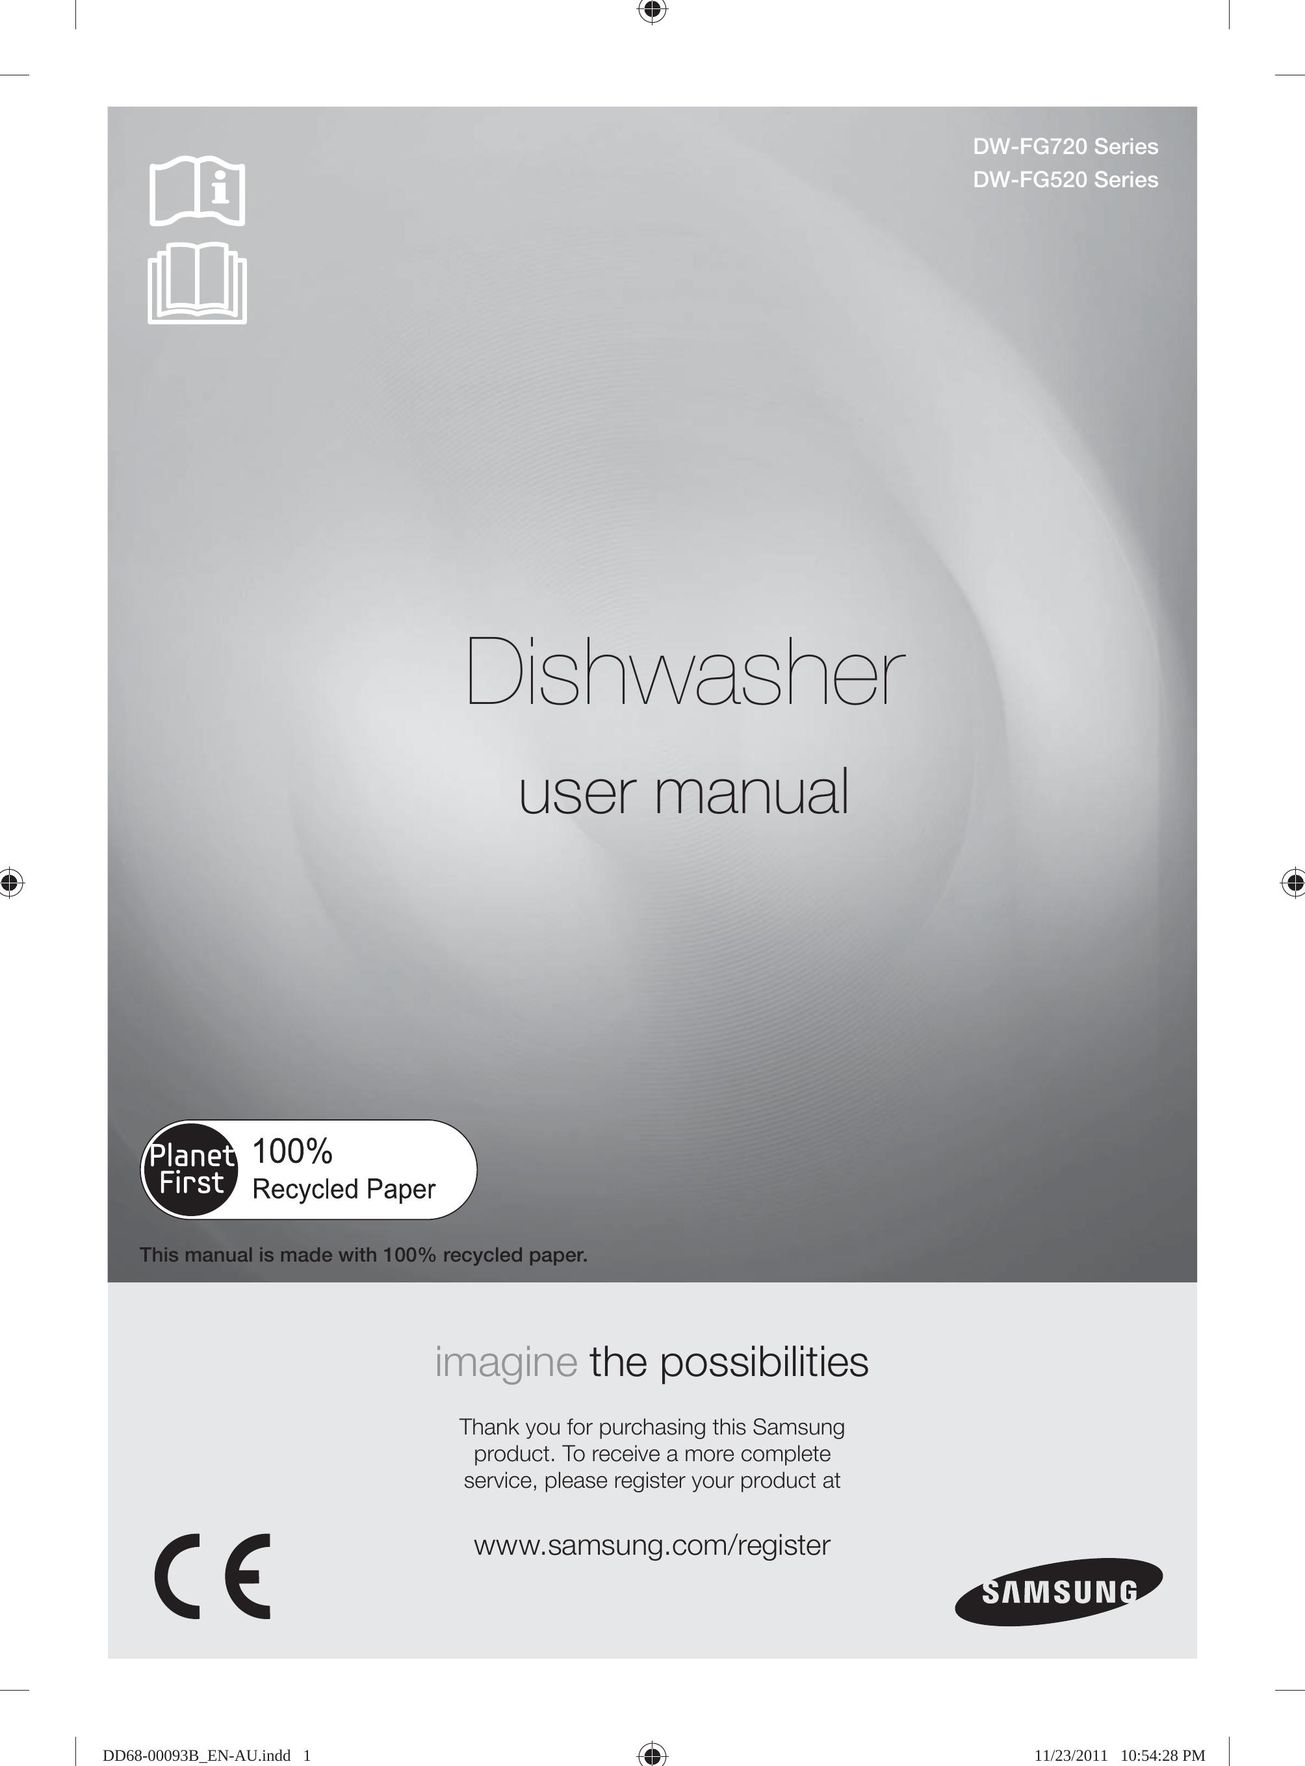 Samsung DW-FG520 Dishwasher User Manual